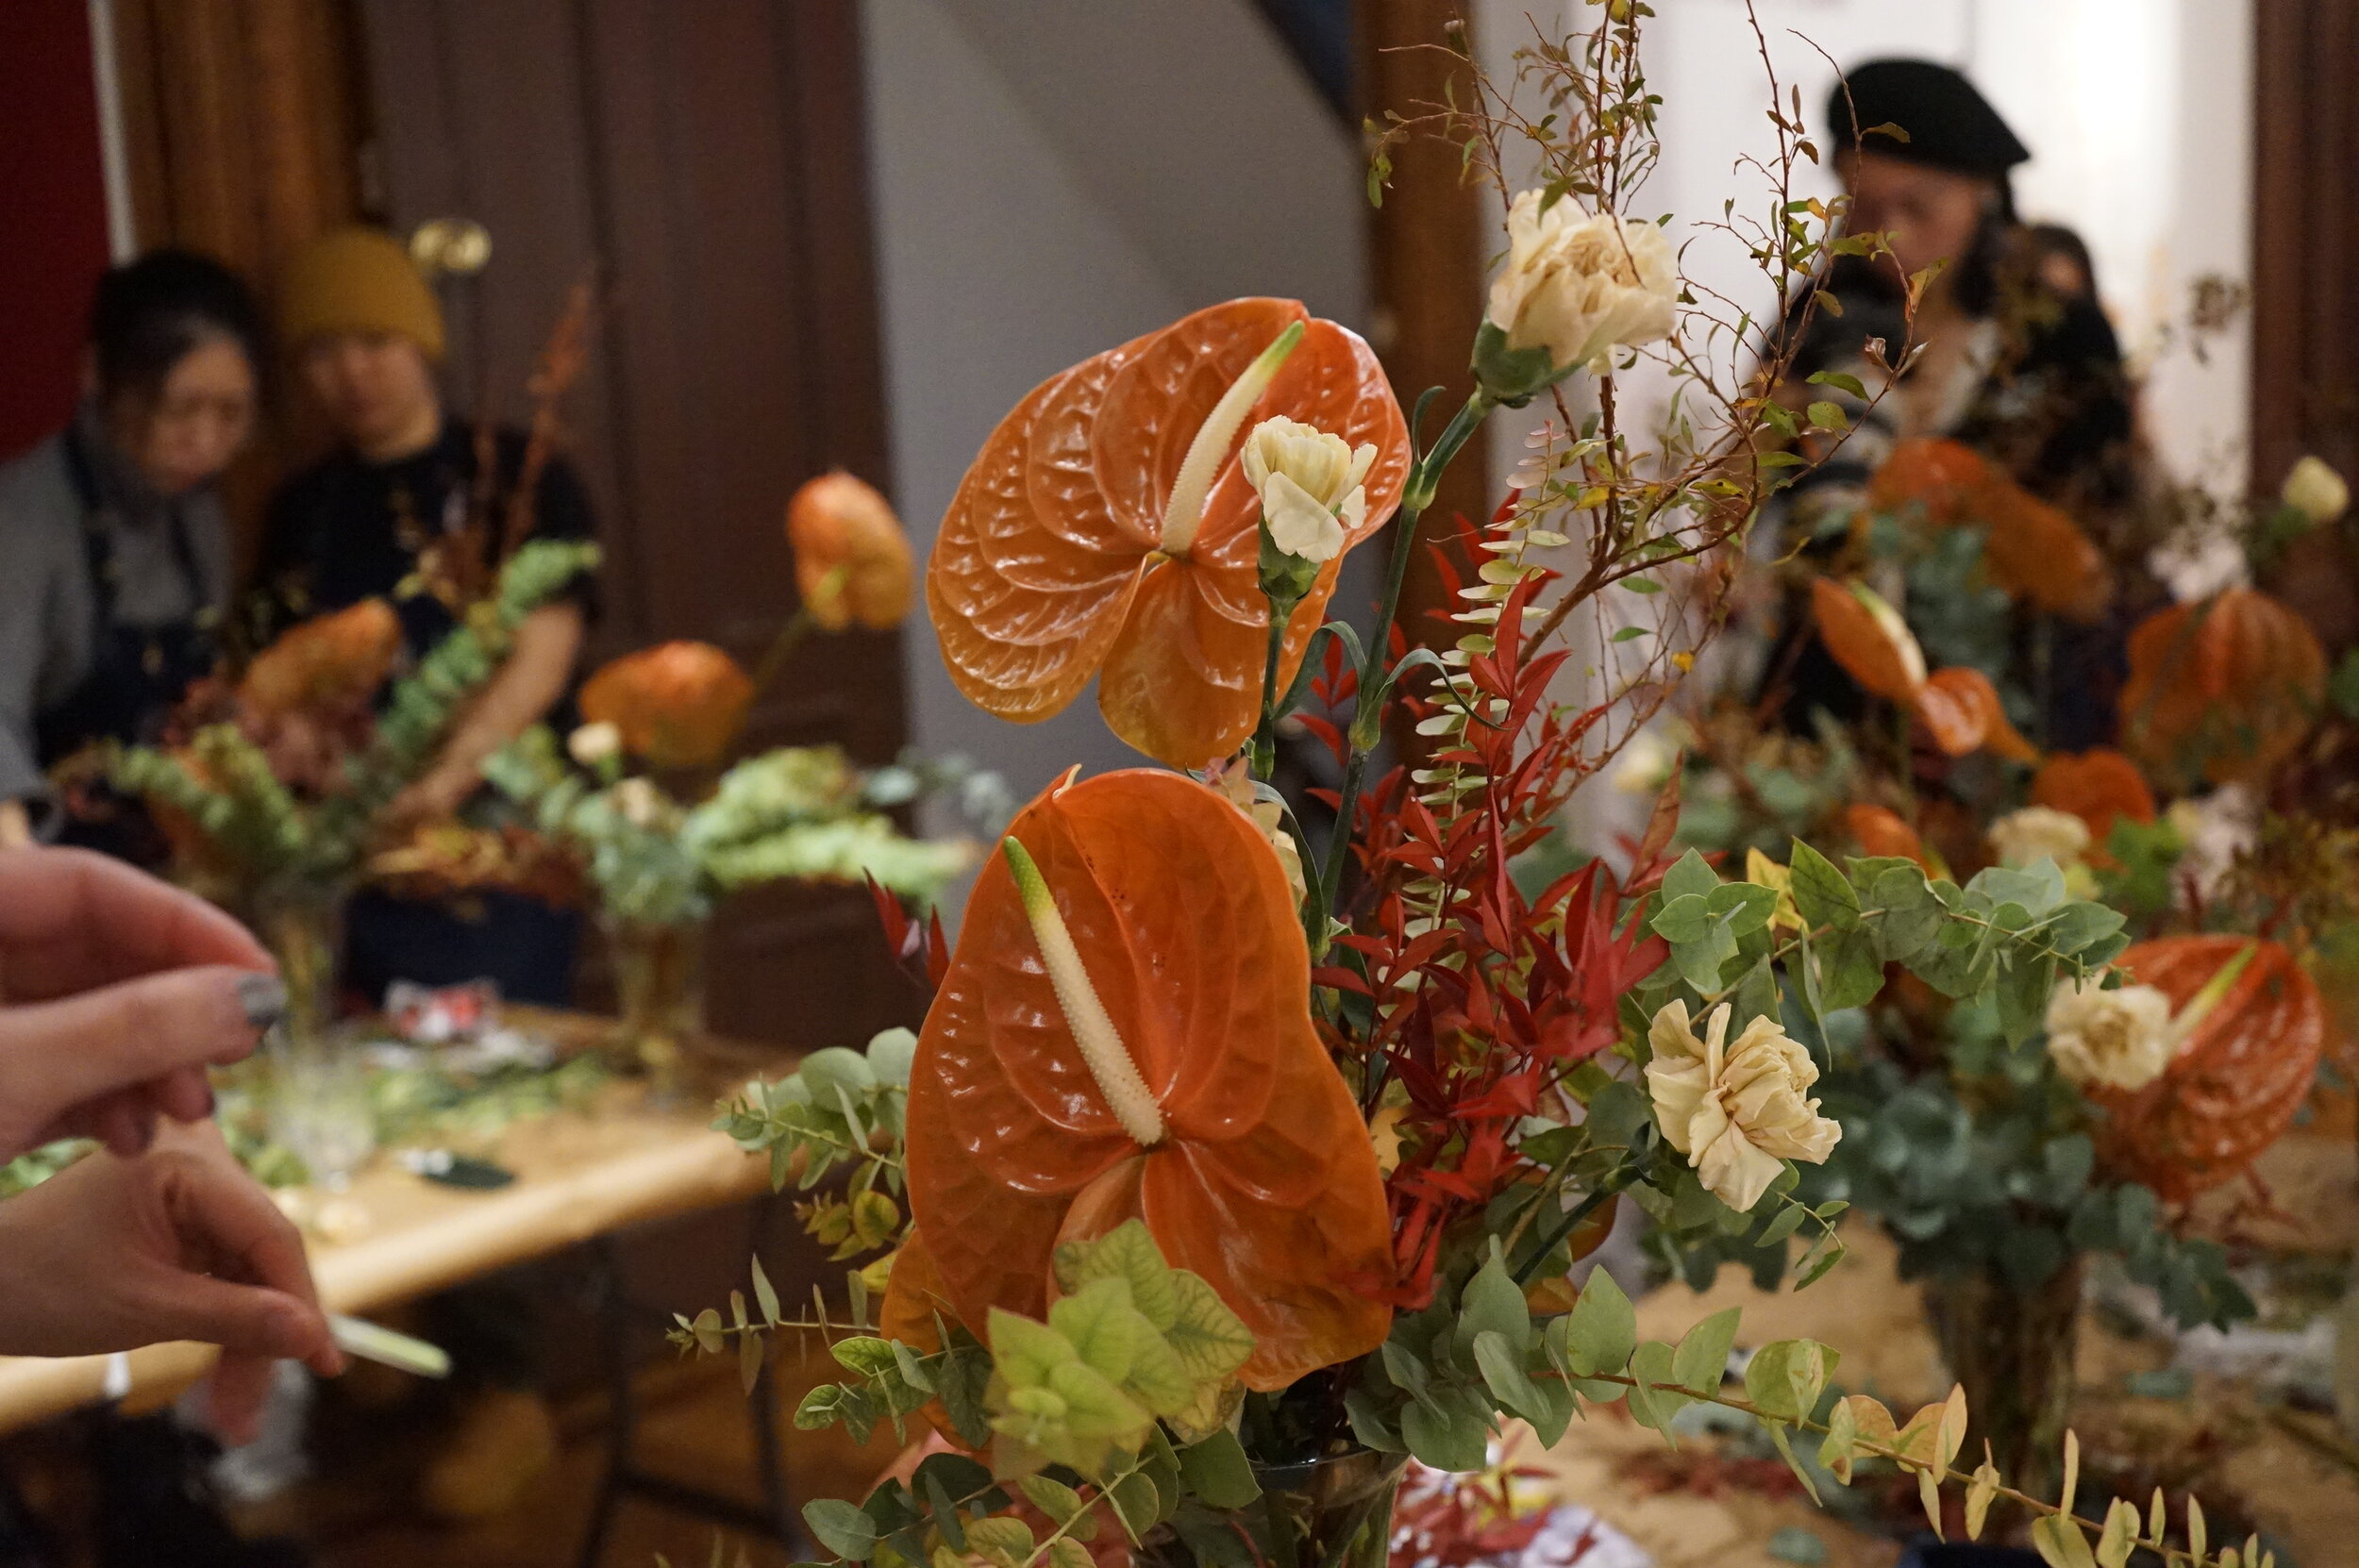   A Taste of Ikebana  at Fou Gallery (11.9.2019), photo by Yilan Wang, courtesy Fou Gallery. 